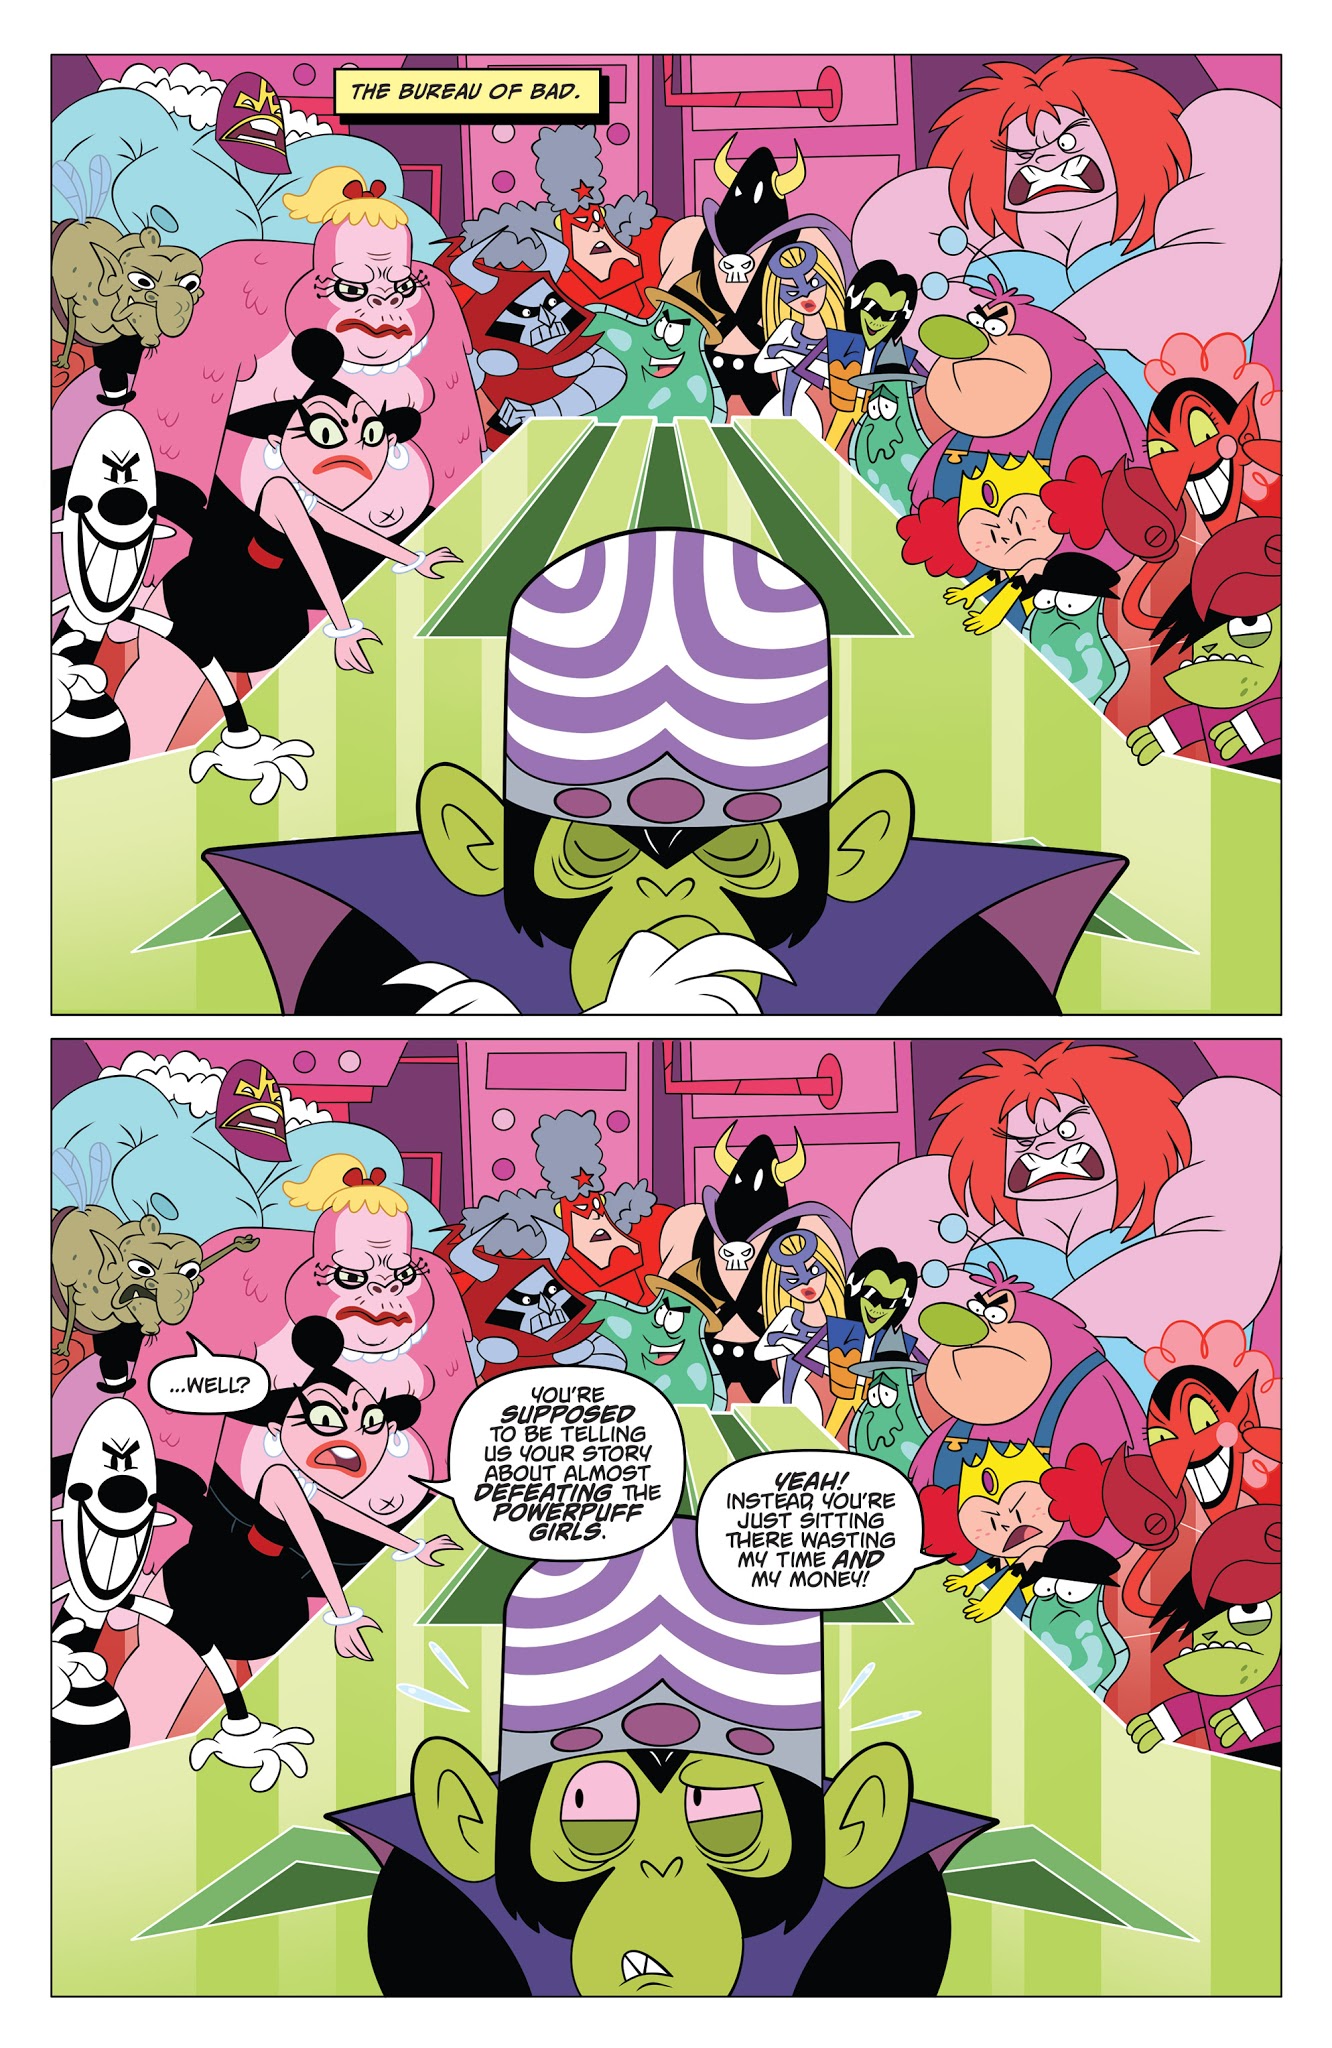 Read online The Powerpuff Girls: Bureau of Bad comic -  Issue #3 - 3